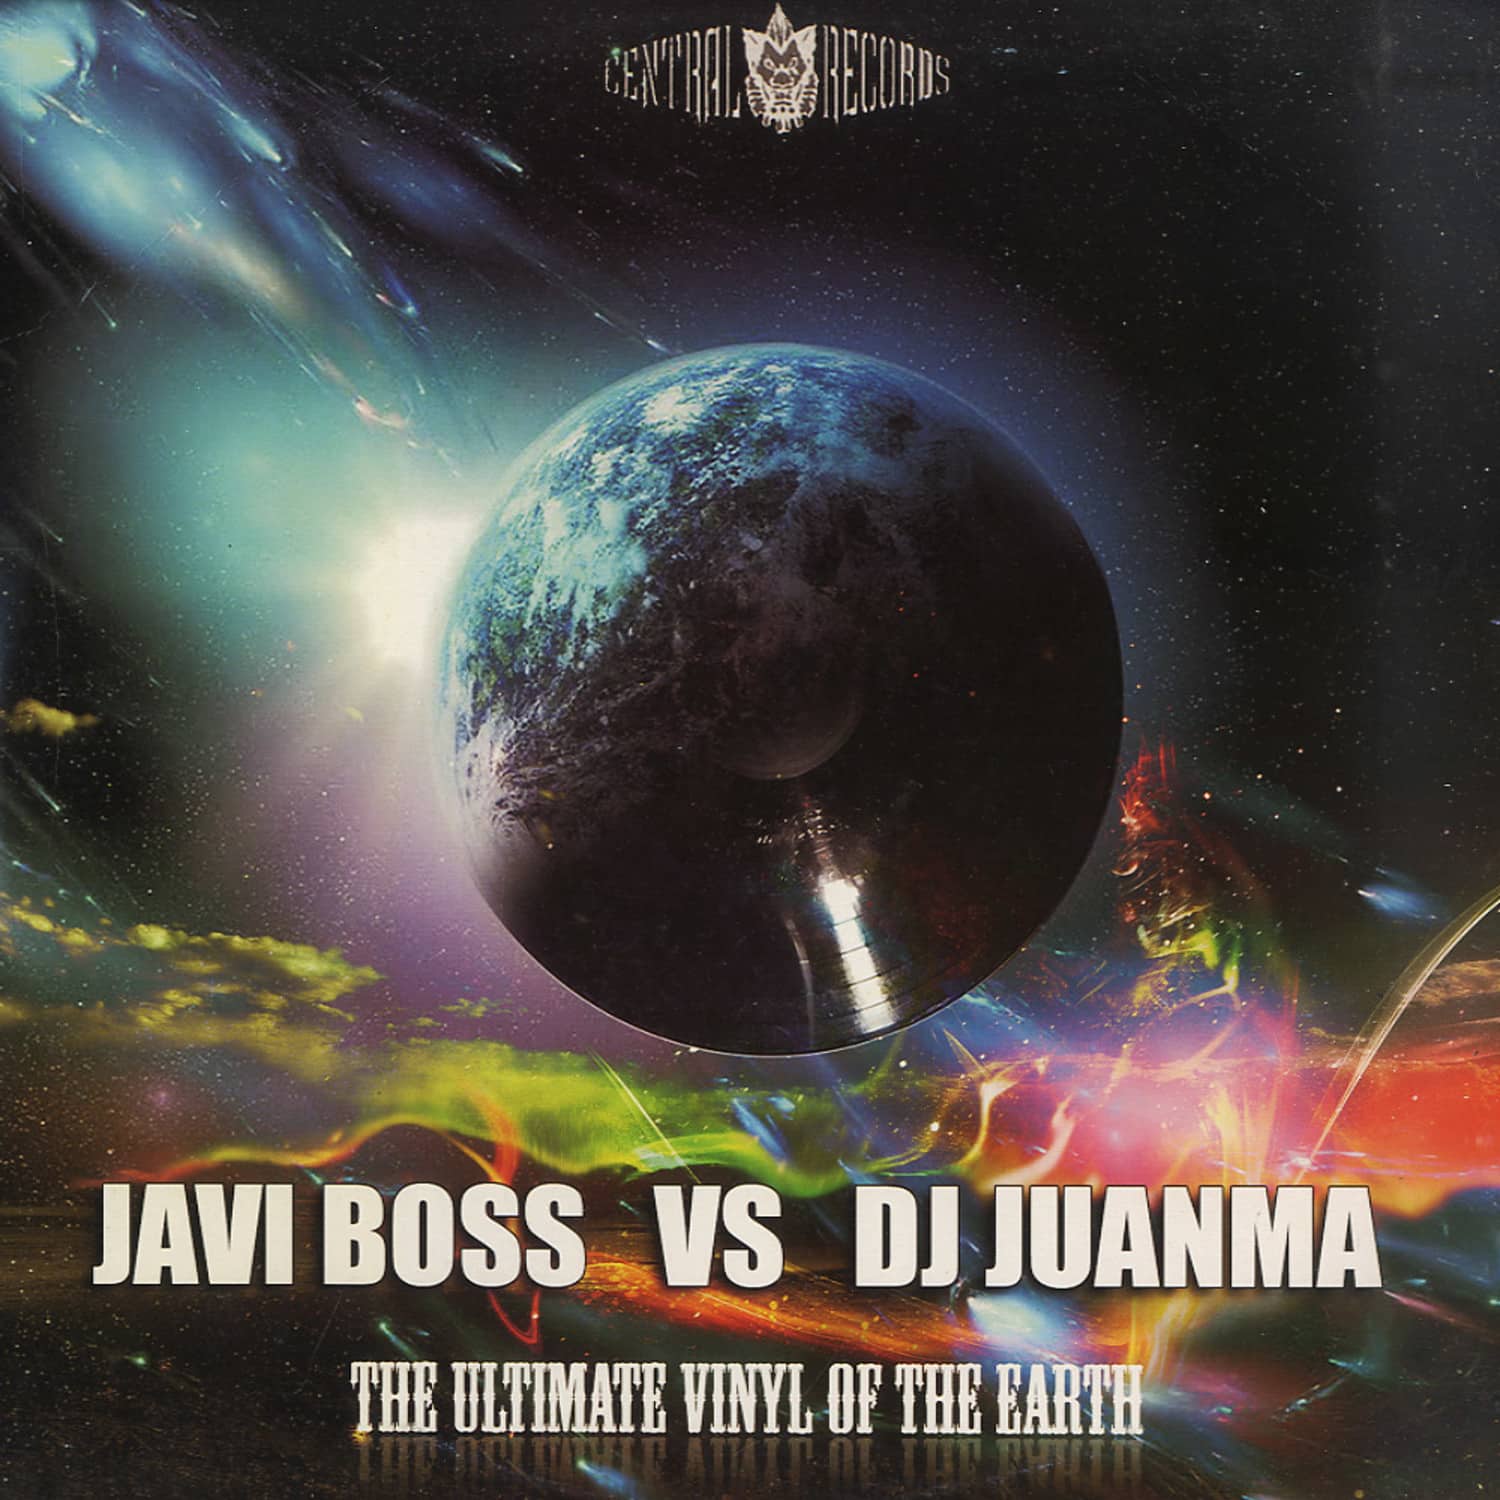 Javi Boss vs DJ Juanma - THE ULTIMATE VINYL OF THE EARTH